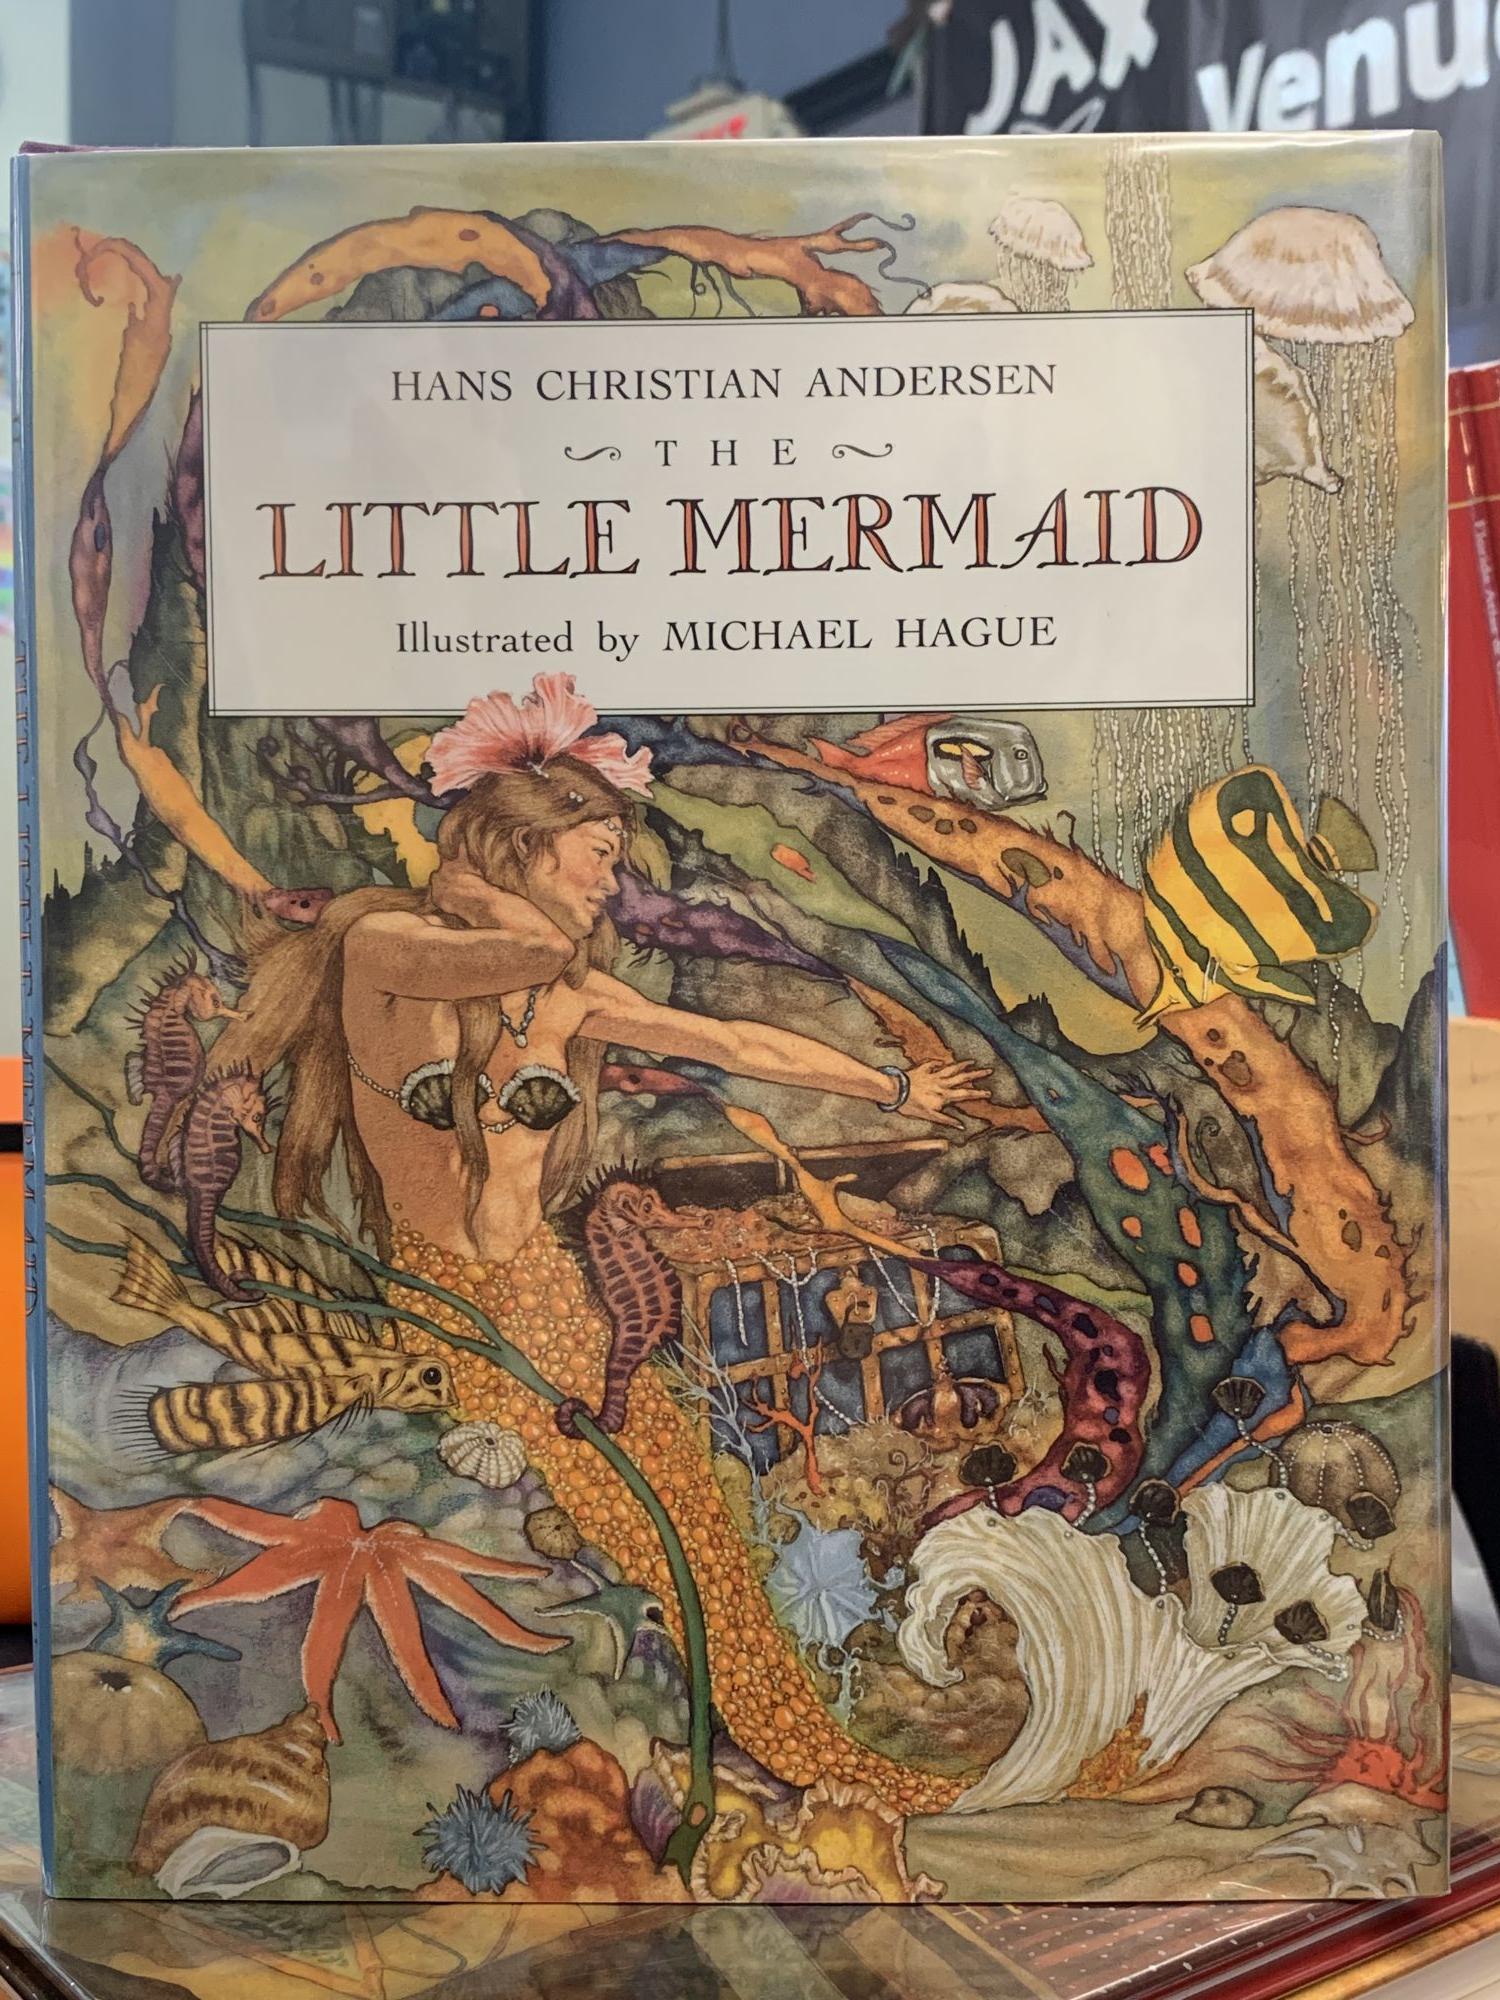 hans christian andersen the little mermaid cover